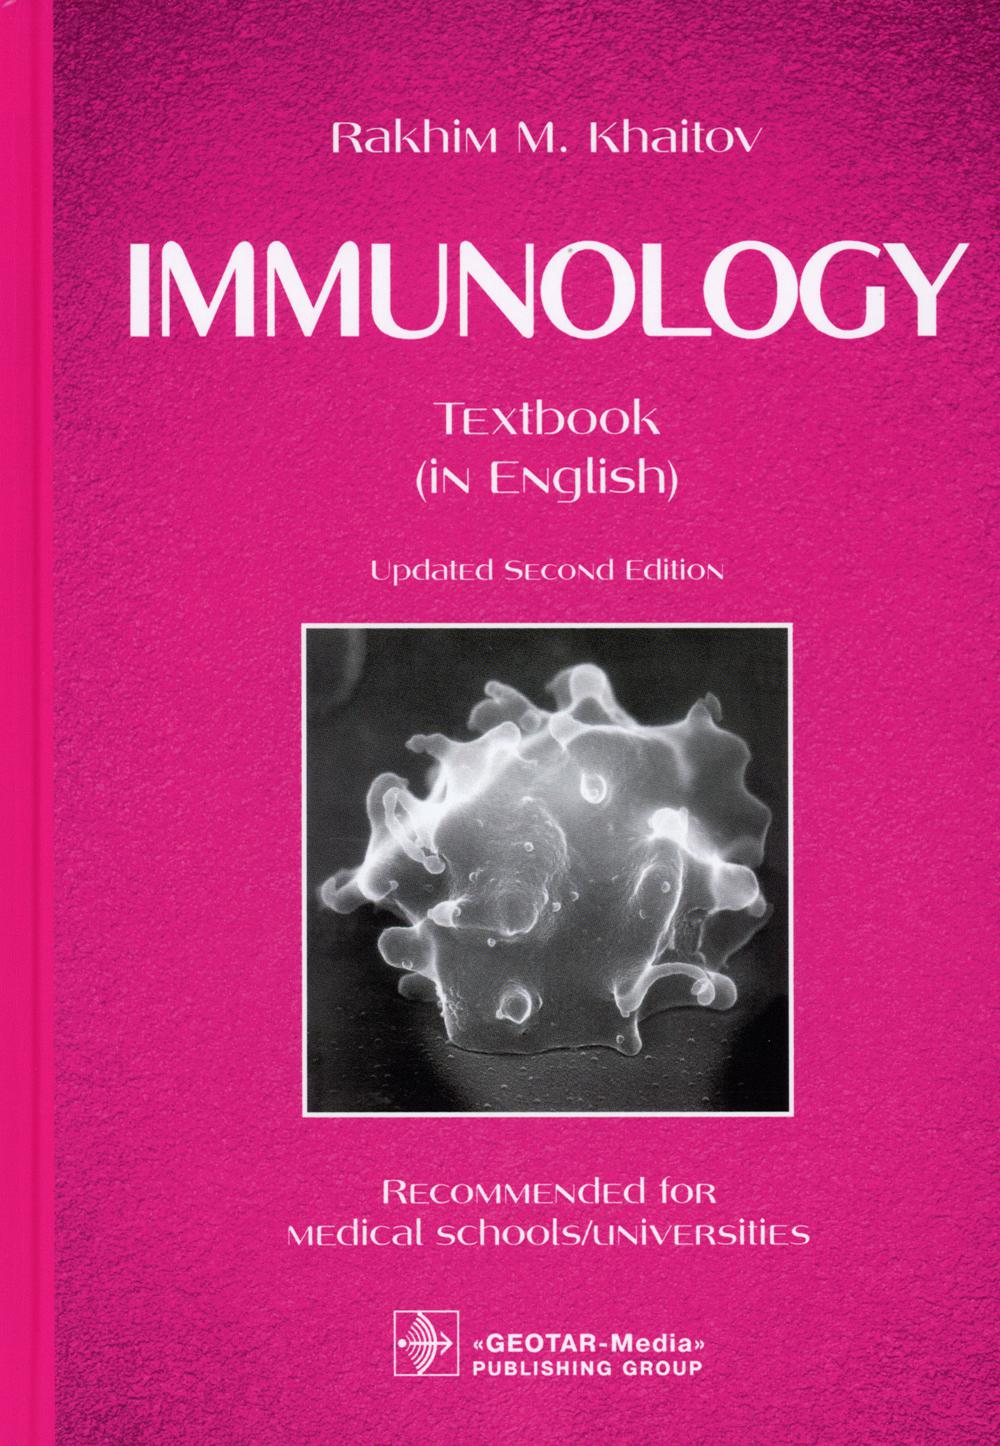 Immunology : textbook / Rakhim M. Khaitov.  2nd updated edition.  Moscow : GEOTAR-Media, 2022.  272 p.